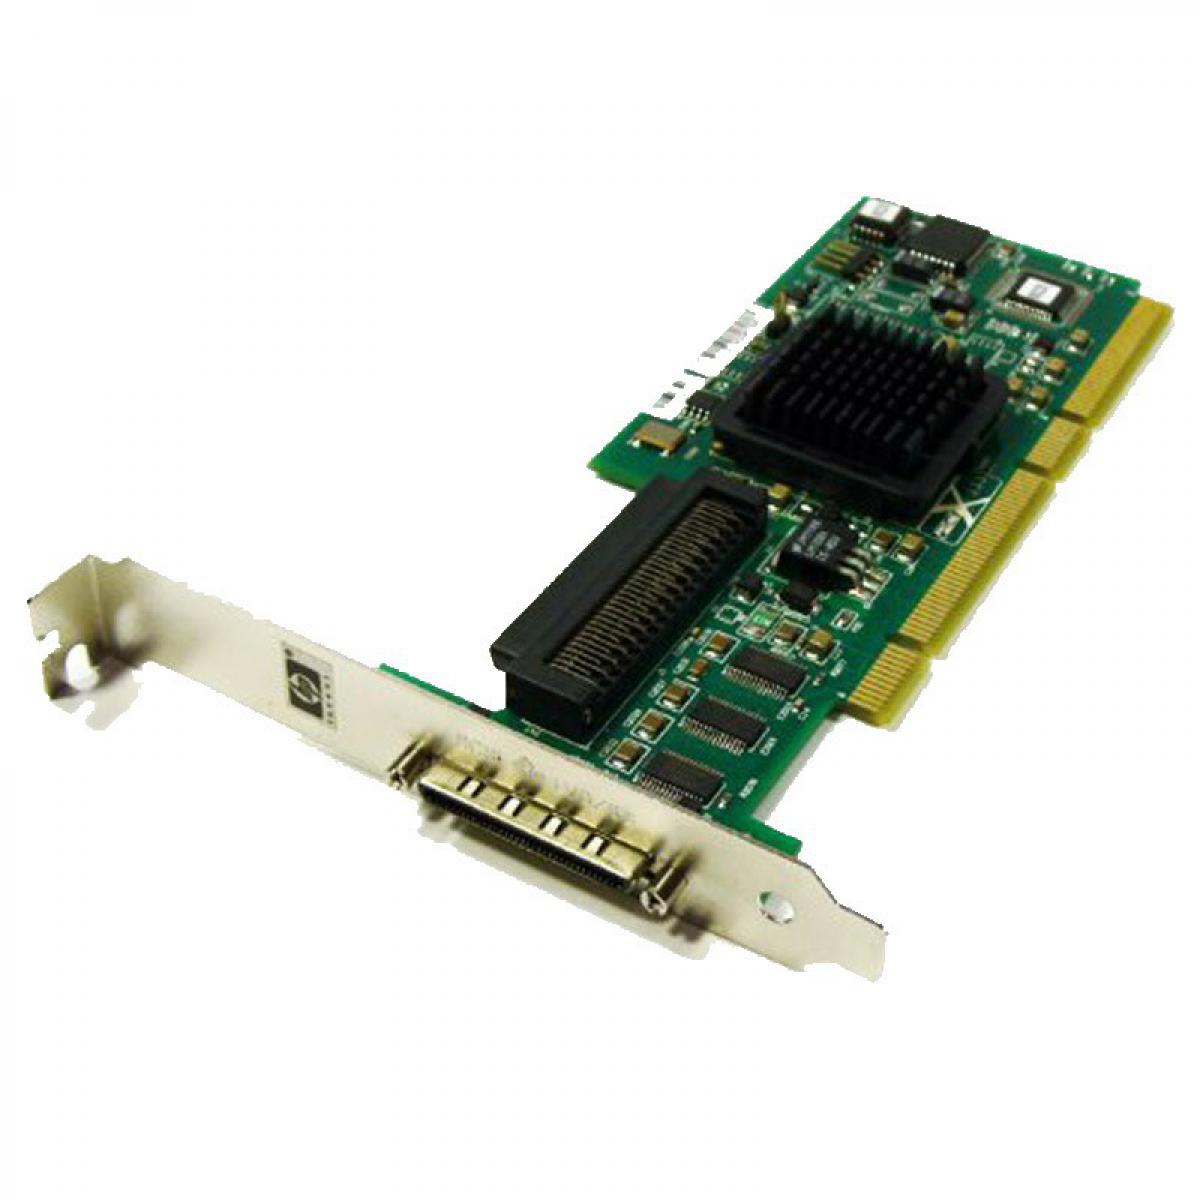 Lsi Logic - Carte contrôleur Raid SCSI LSI Logic LSI20320C-HP PCIe Ultra320 403051-001 Passif - Carte réseau